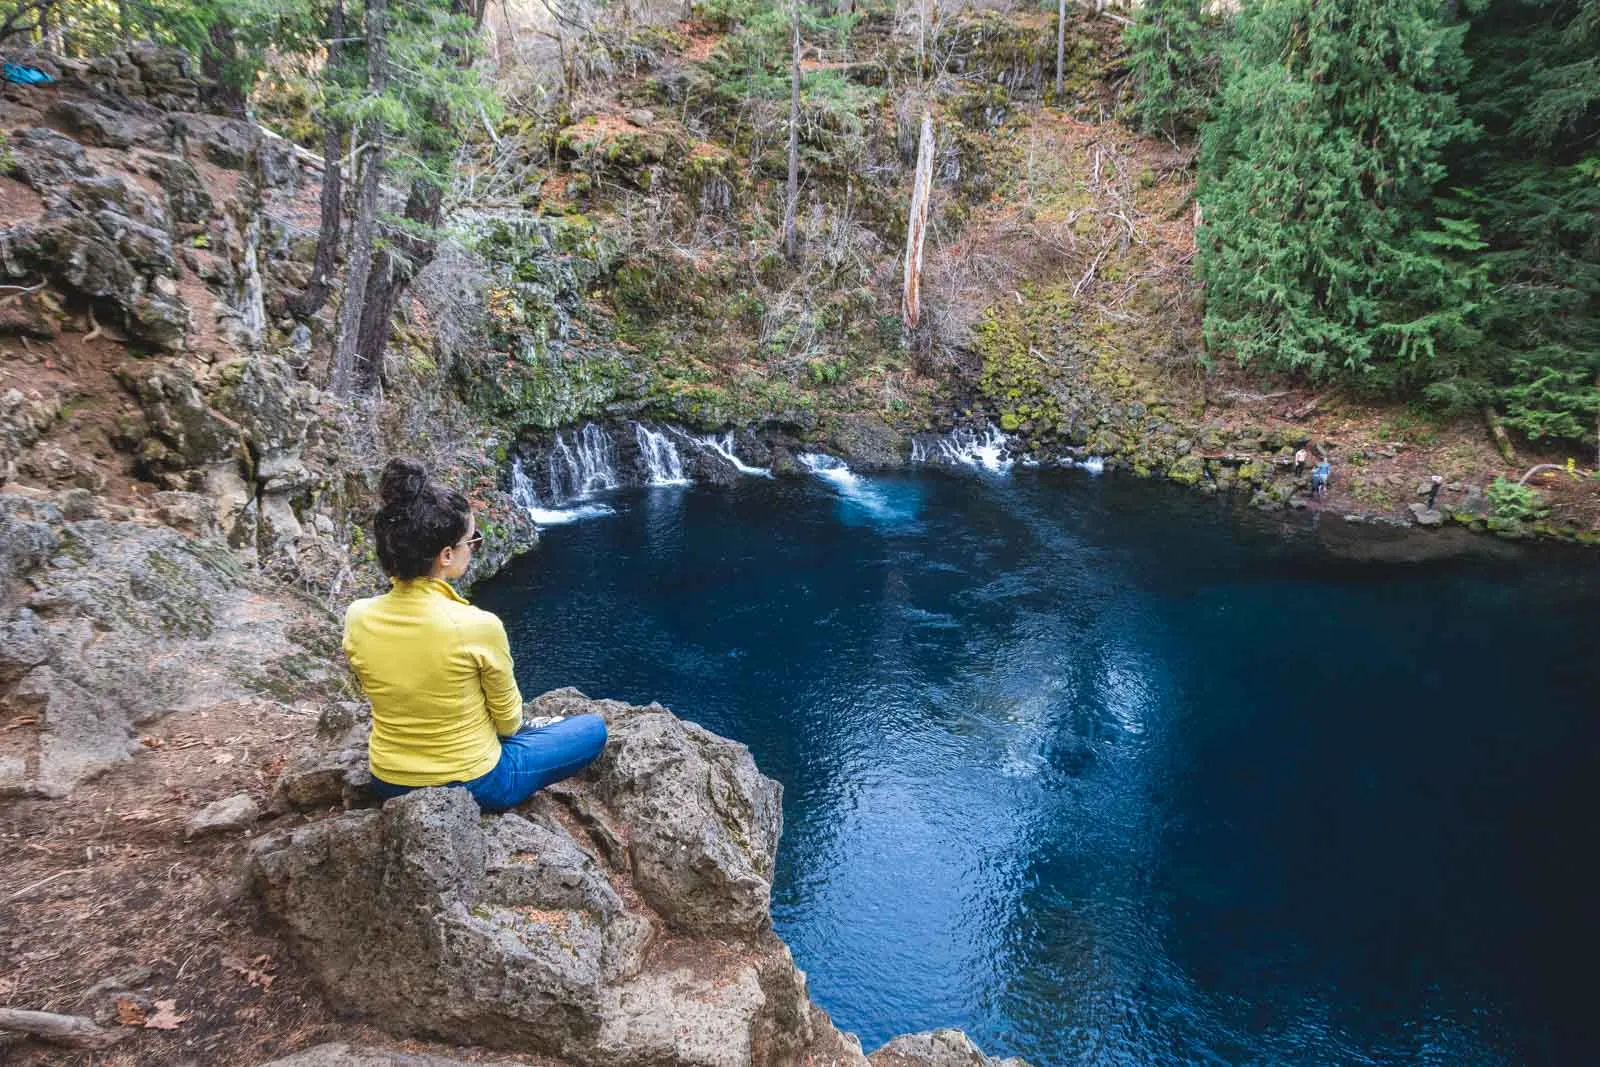 Blue Pool is a cool hike near Bend, Oregon